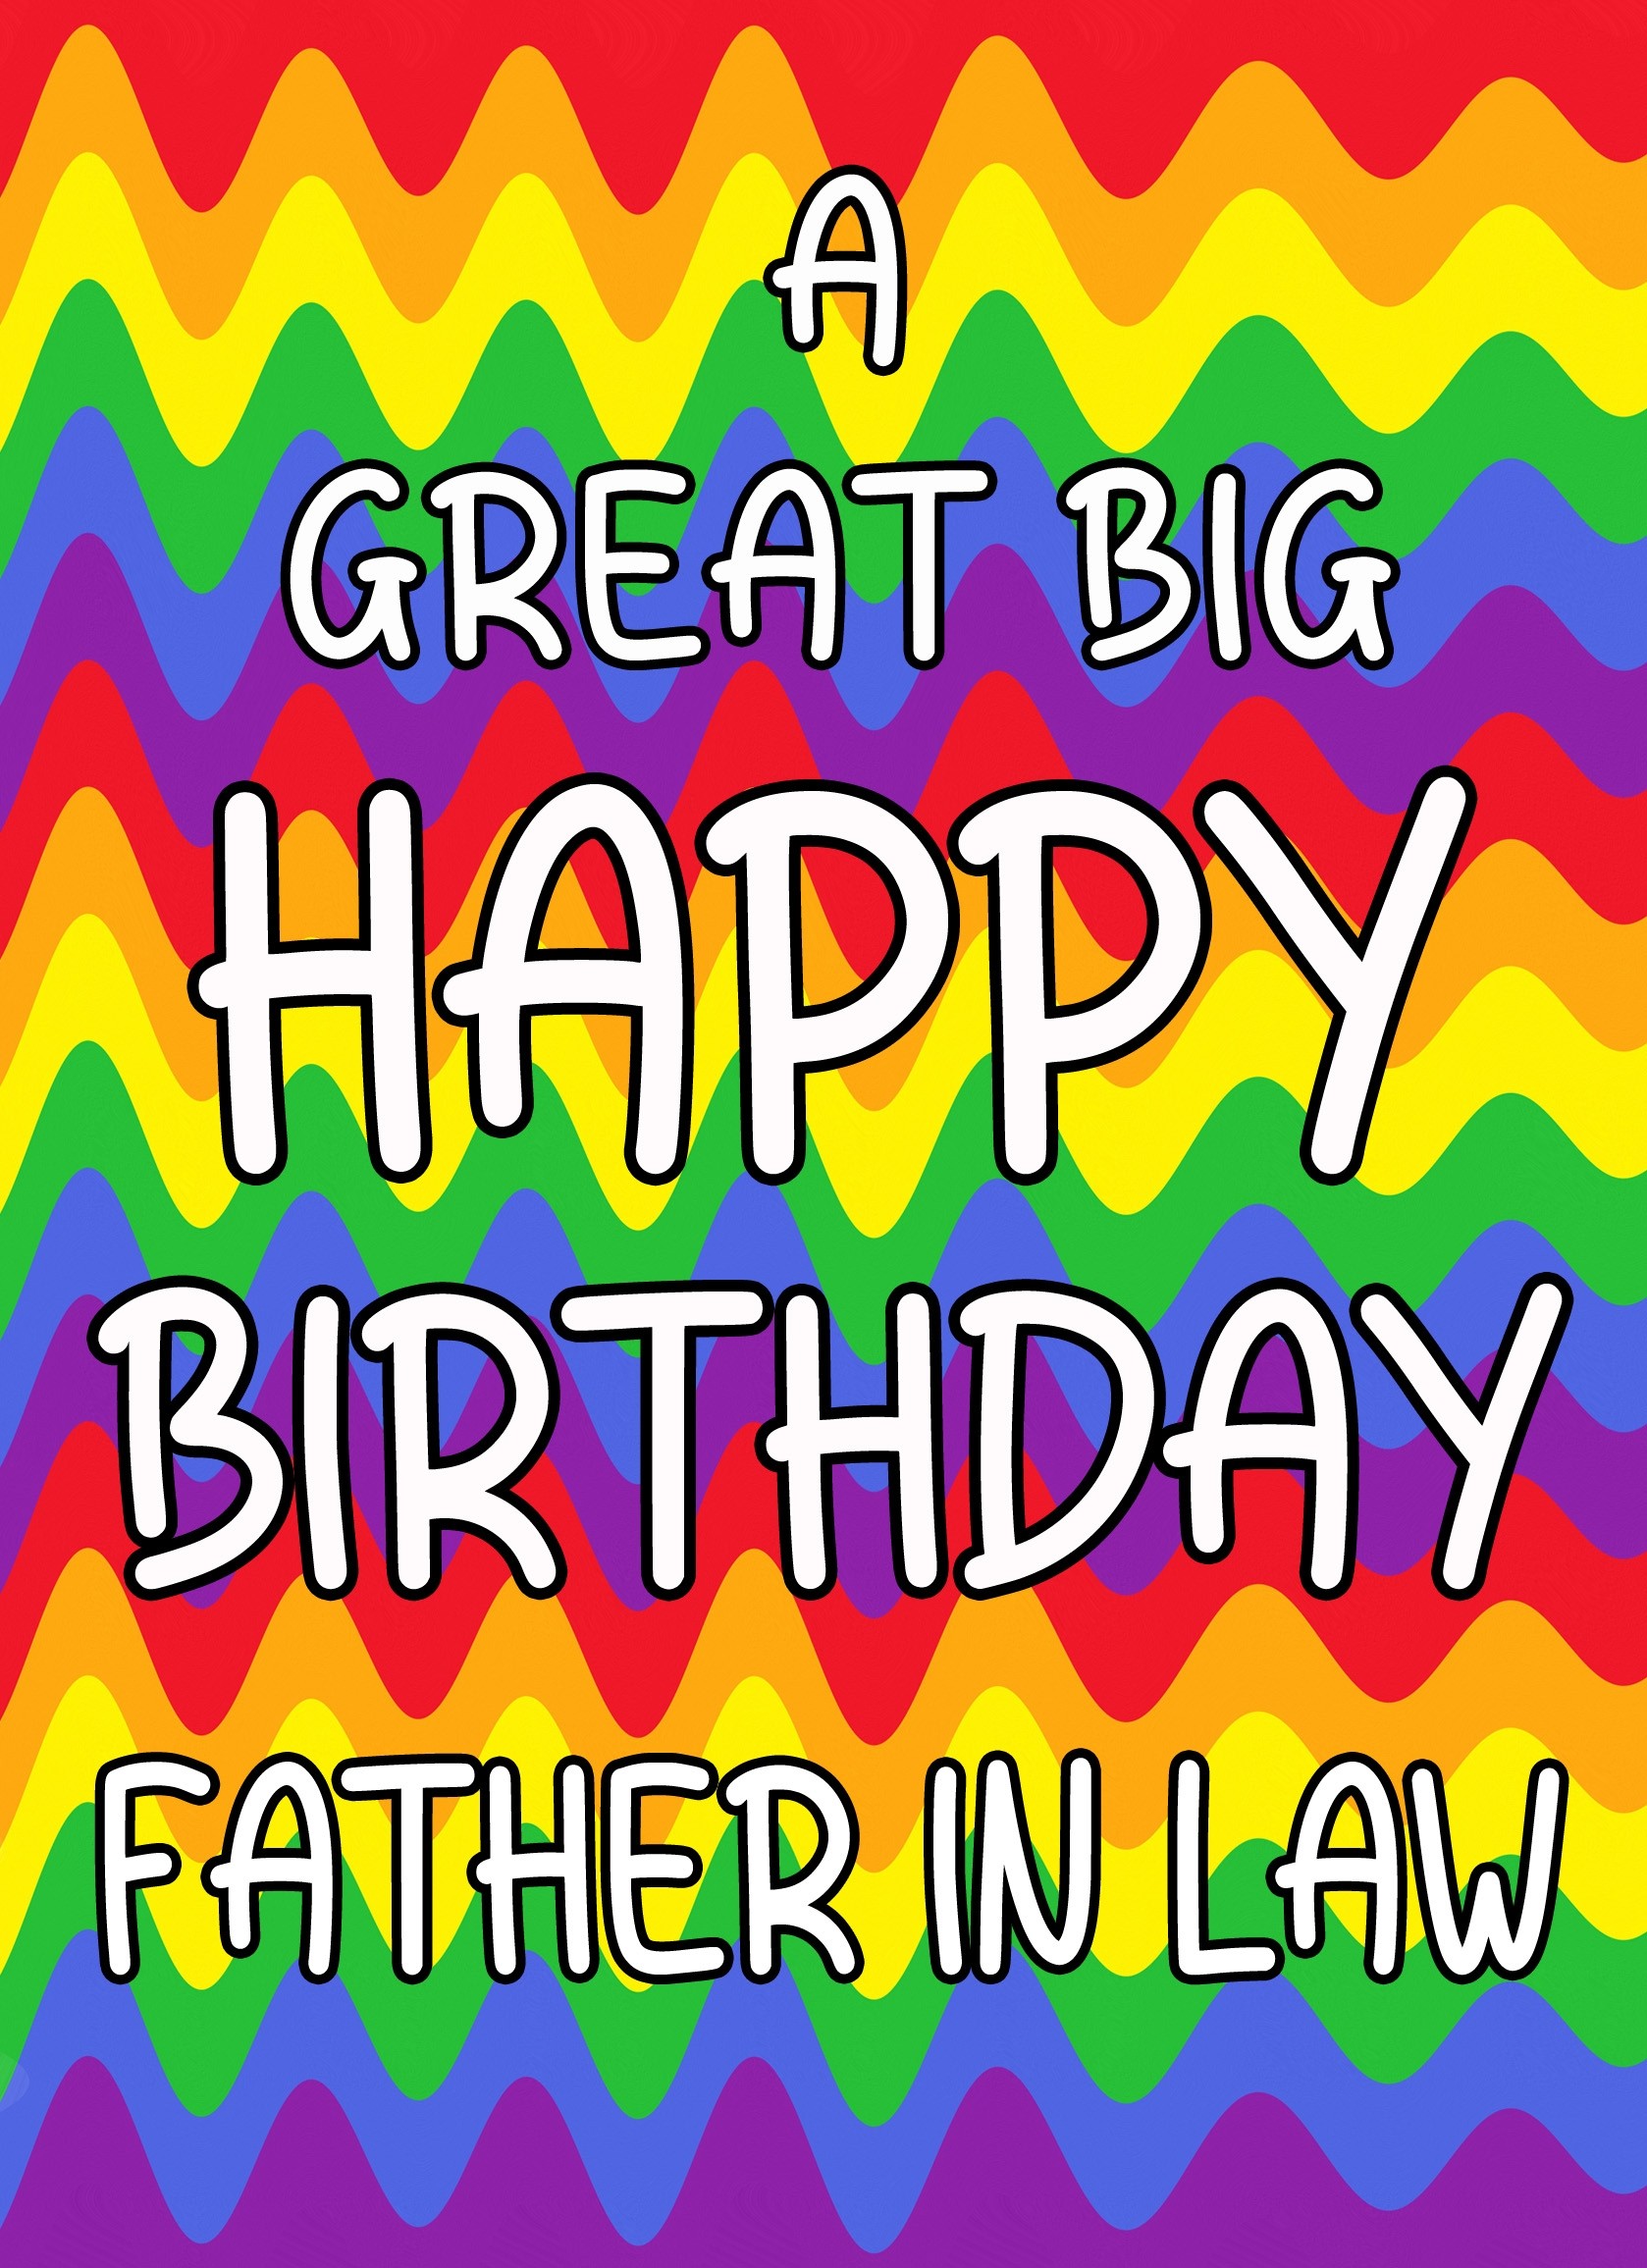 Happy Birthday 'Father in Law' Greeting Card (Rainbow)